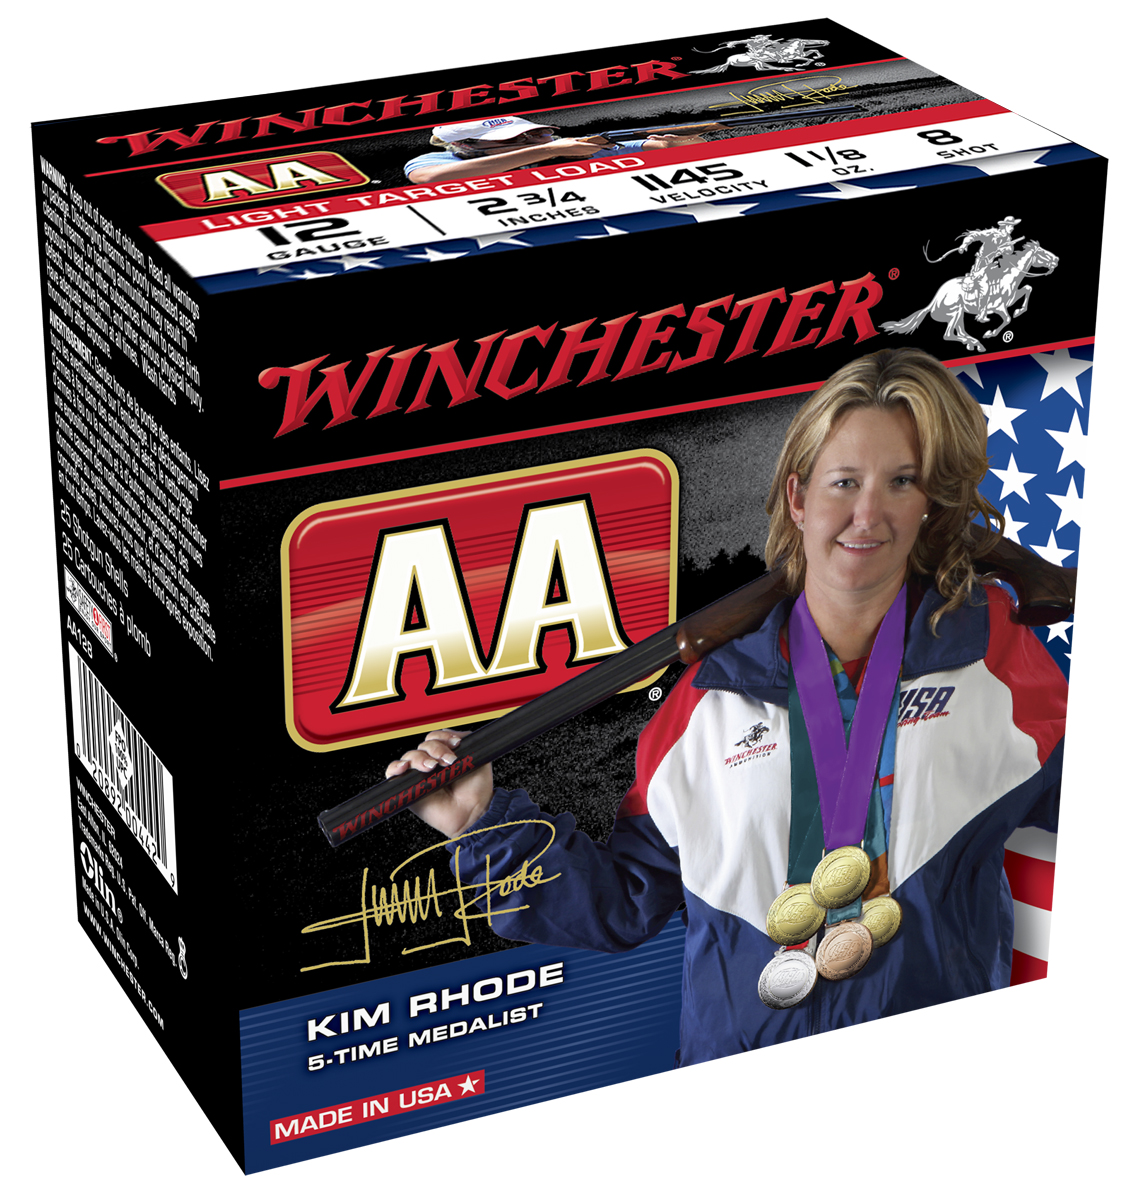 Winchester box featuring Olympian shooter Kim Rhode